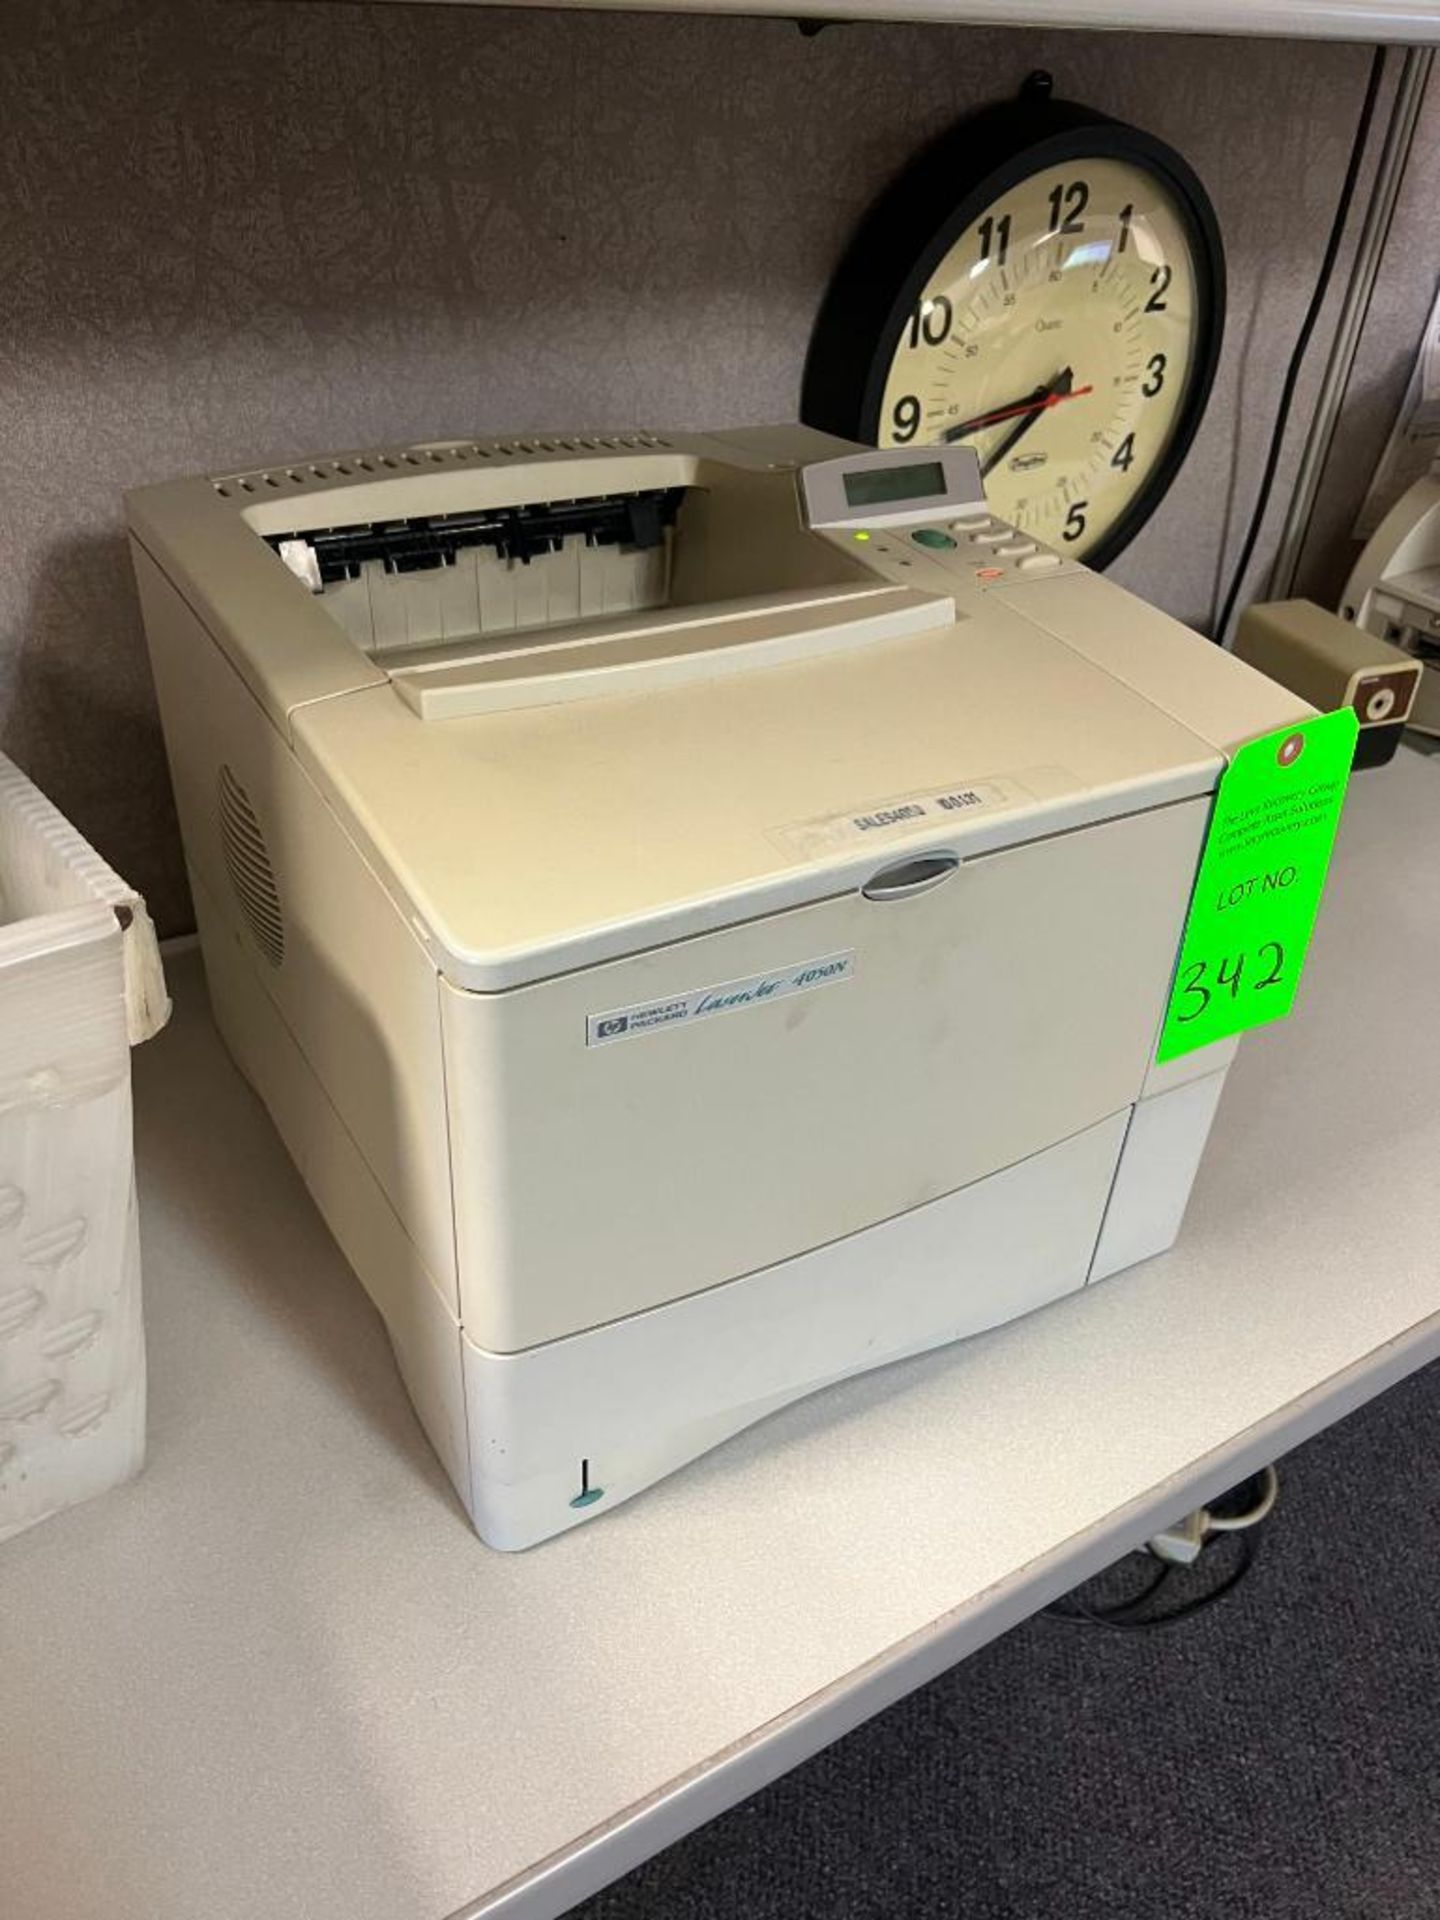 Hewlett-Packard Model LaserJet 4050n Printer - Image 3 of 3